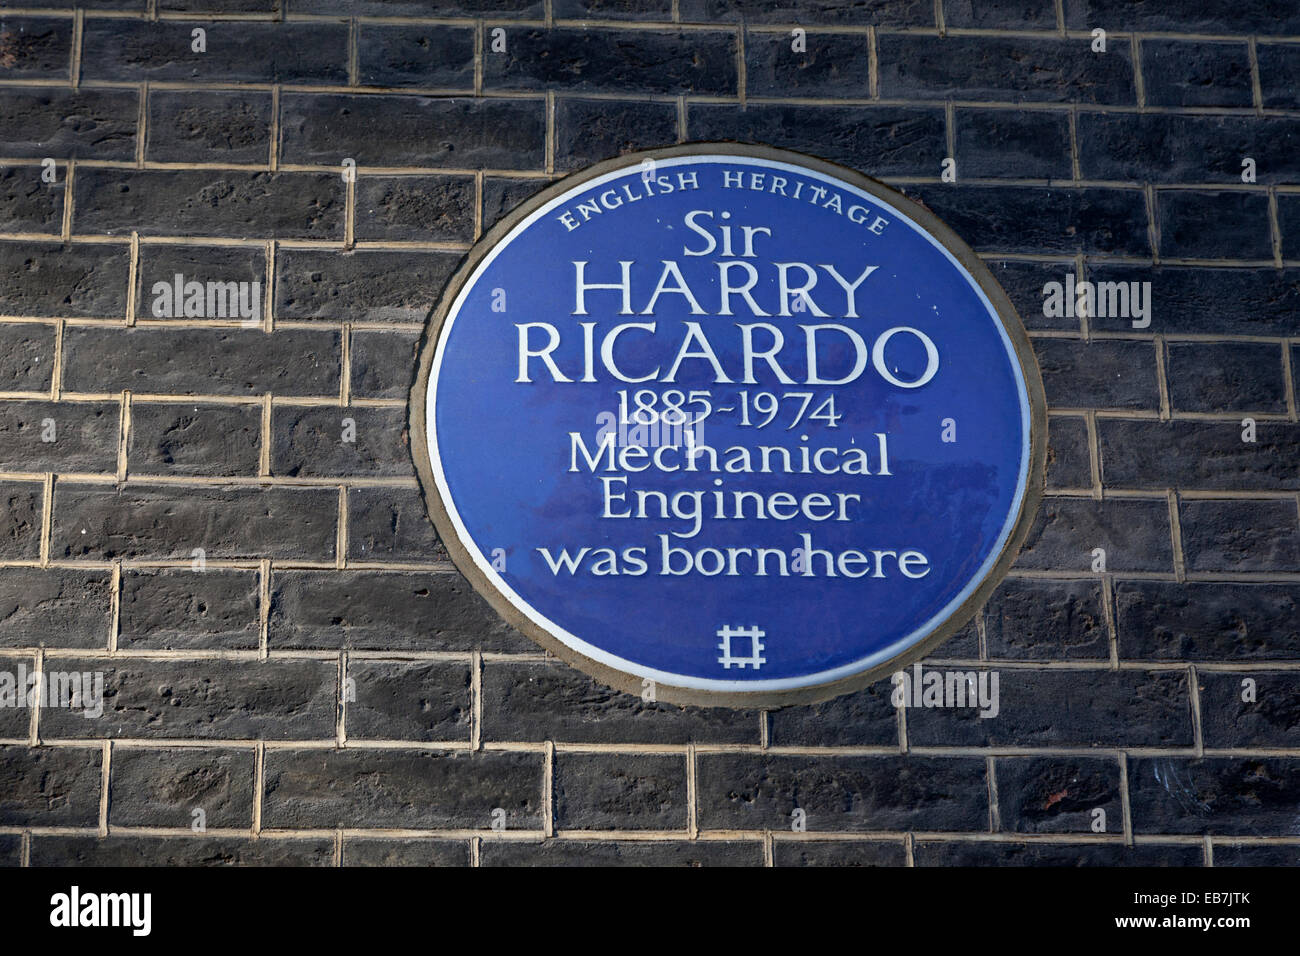 Sir Harry Ricardo, Mechanical Engineer. English Heritage Blue Plaque, London Stock Photo